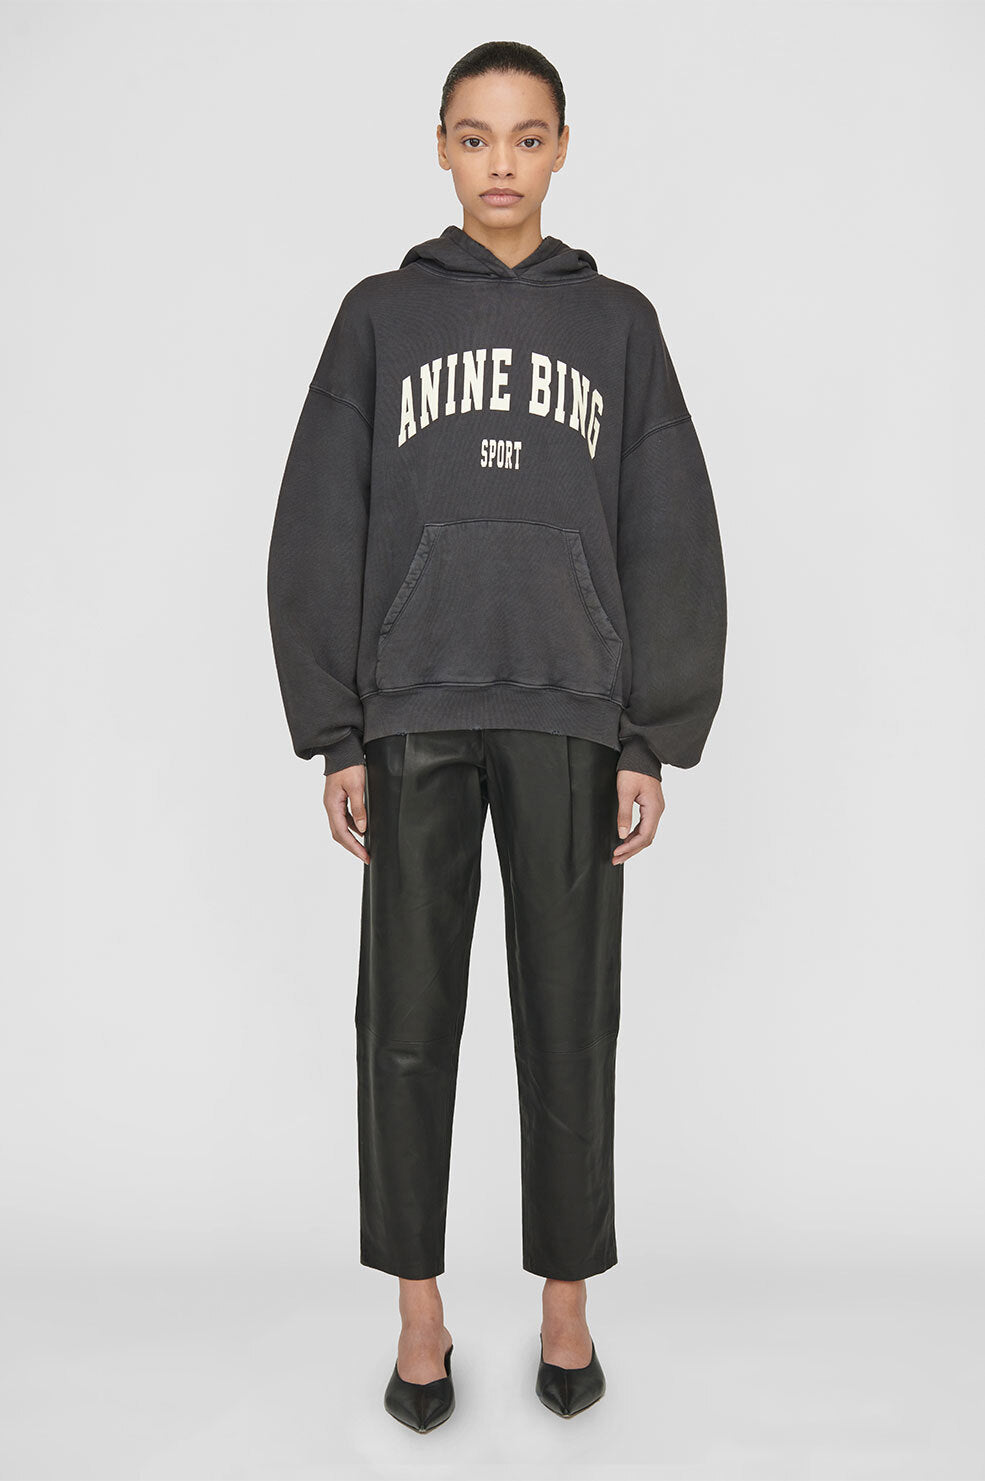 ANINE BING Harvey Sweatshirt - Washed Black - On Model Front